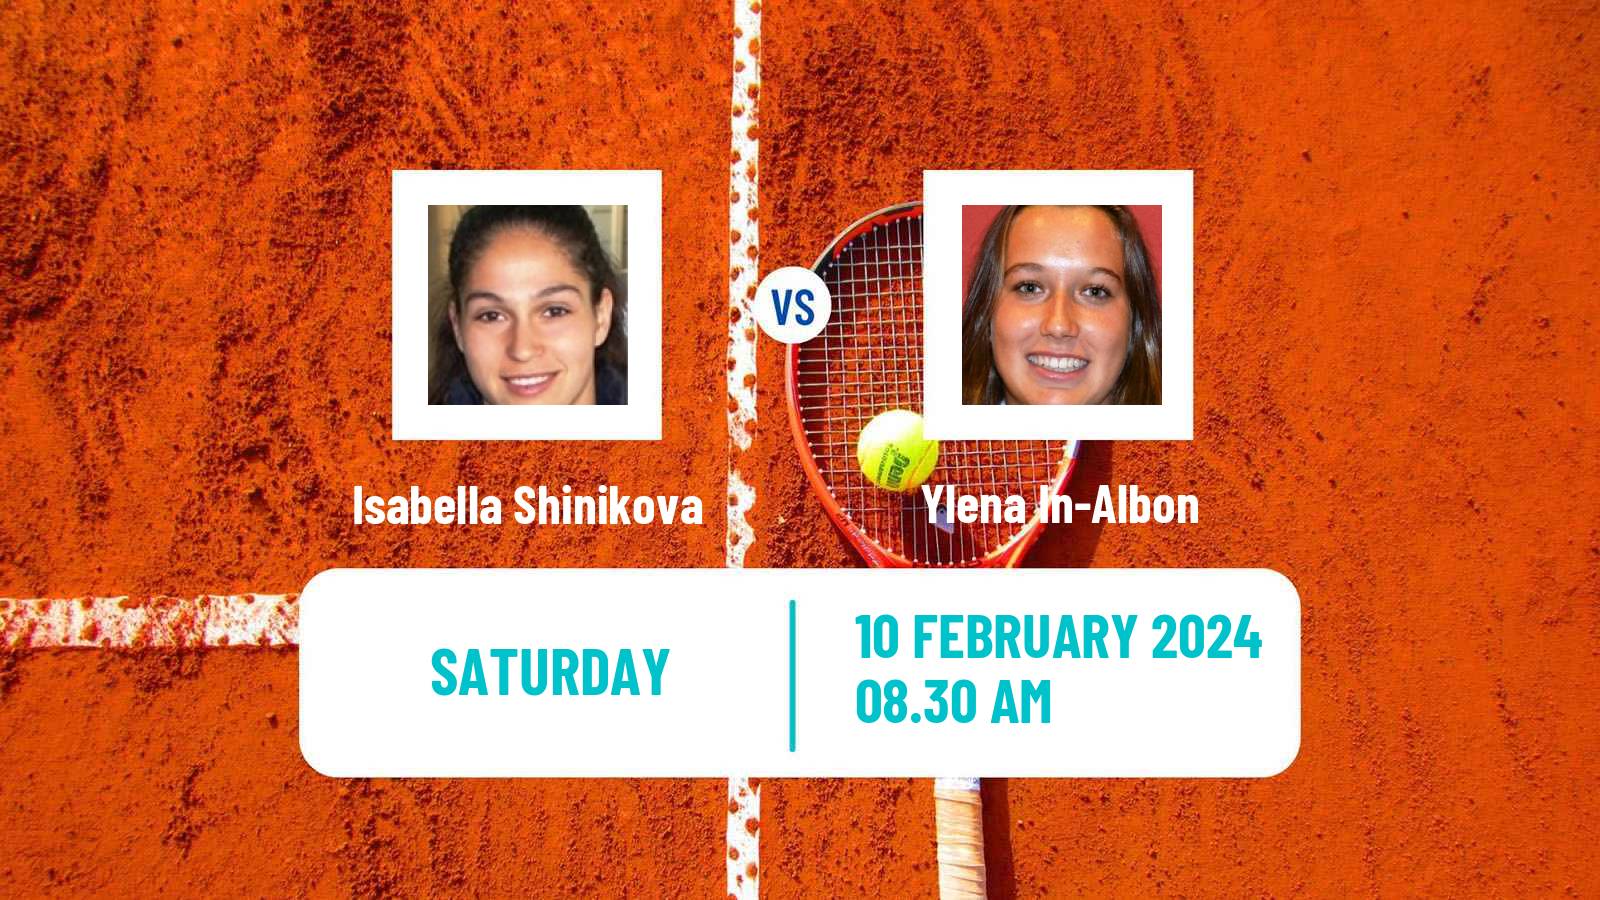 Tennis ITF W35 Antalya 2 Women Isabella Shinikova - Ylena In-Albon